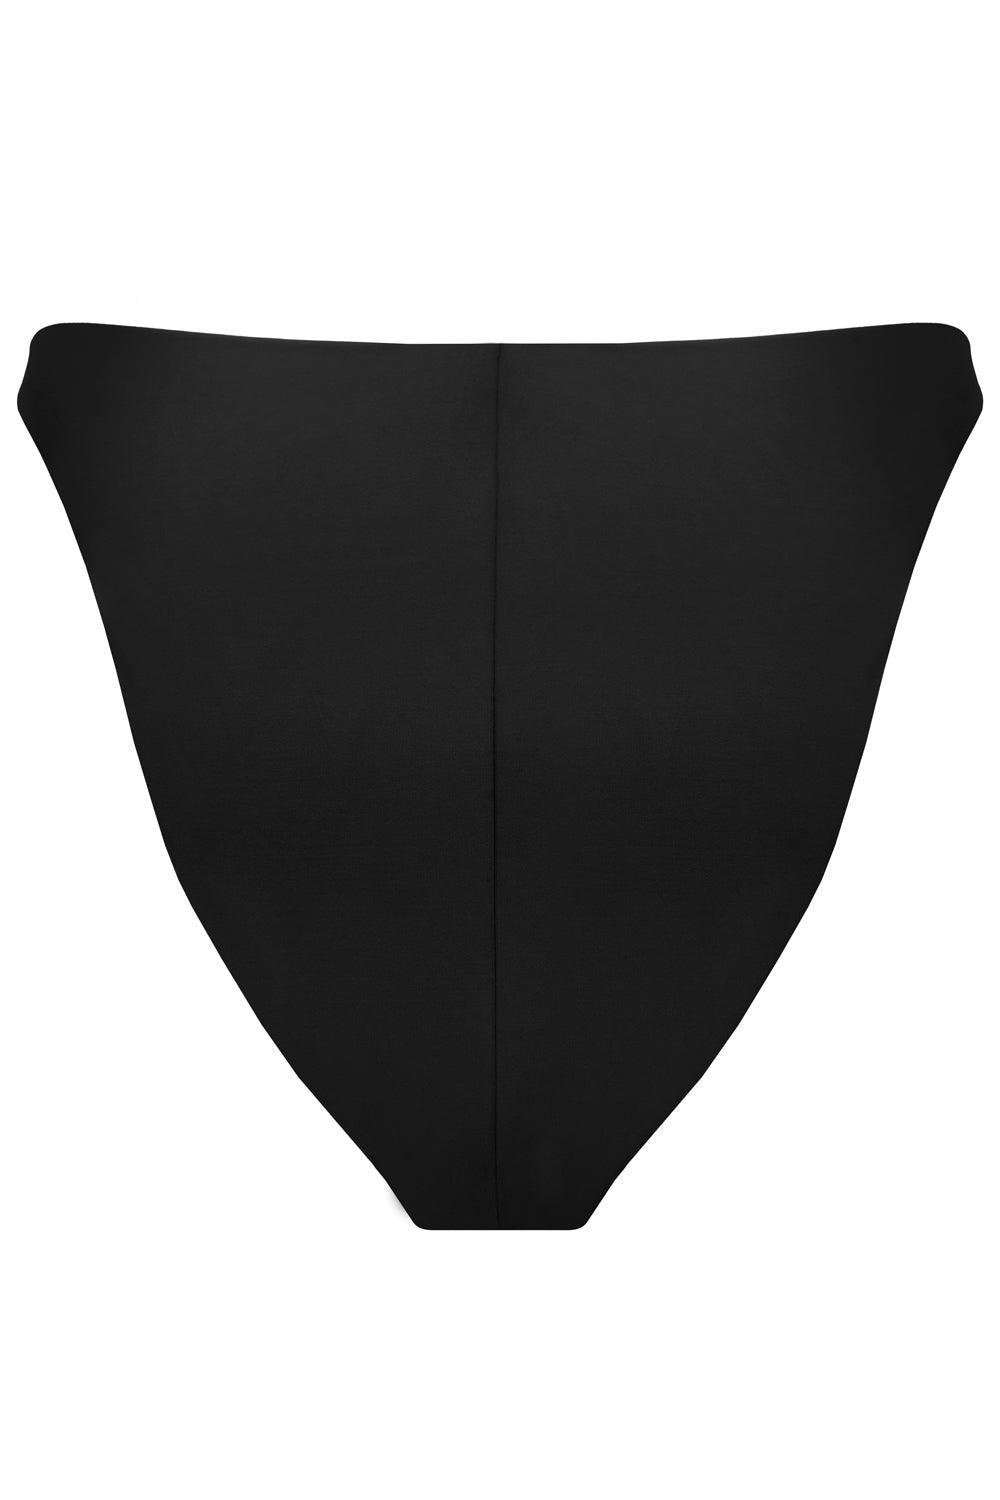 Radiya Black high waisted bikini bottom - Bikini bottom by Keosme. Shop on yesUndress